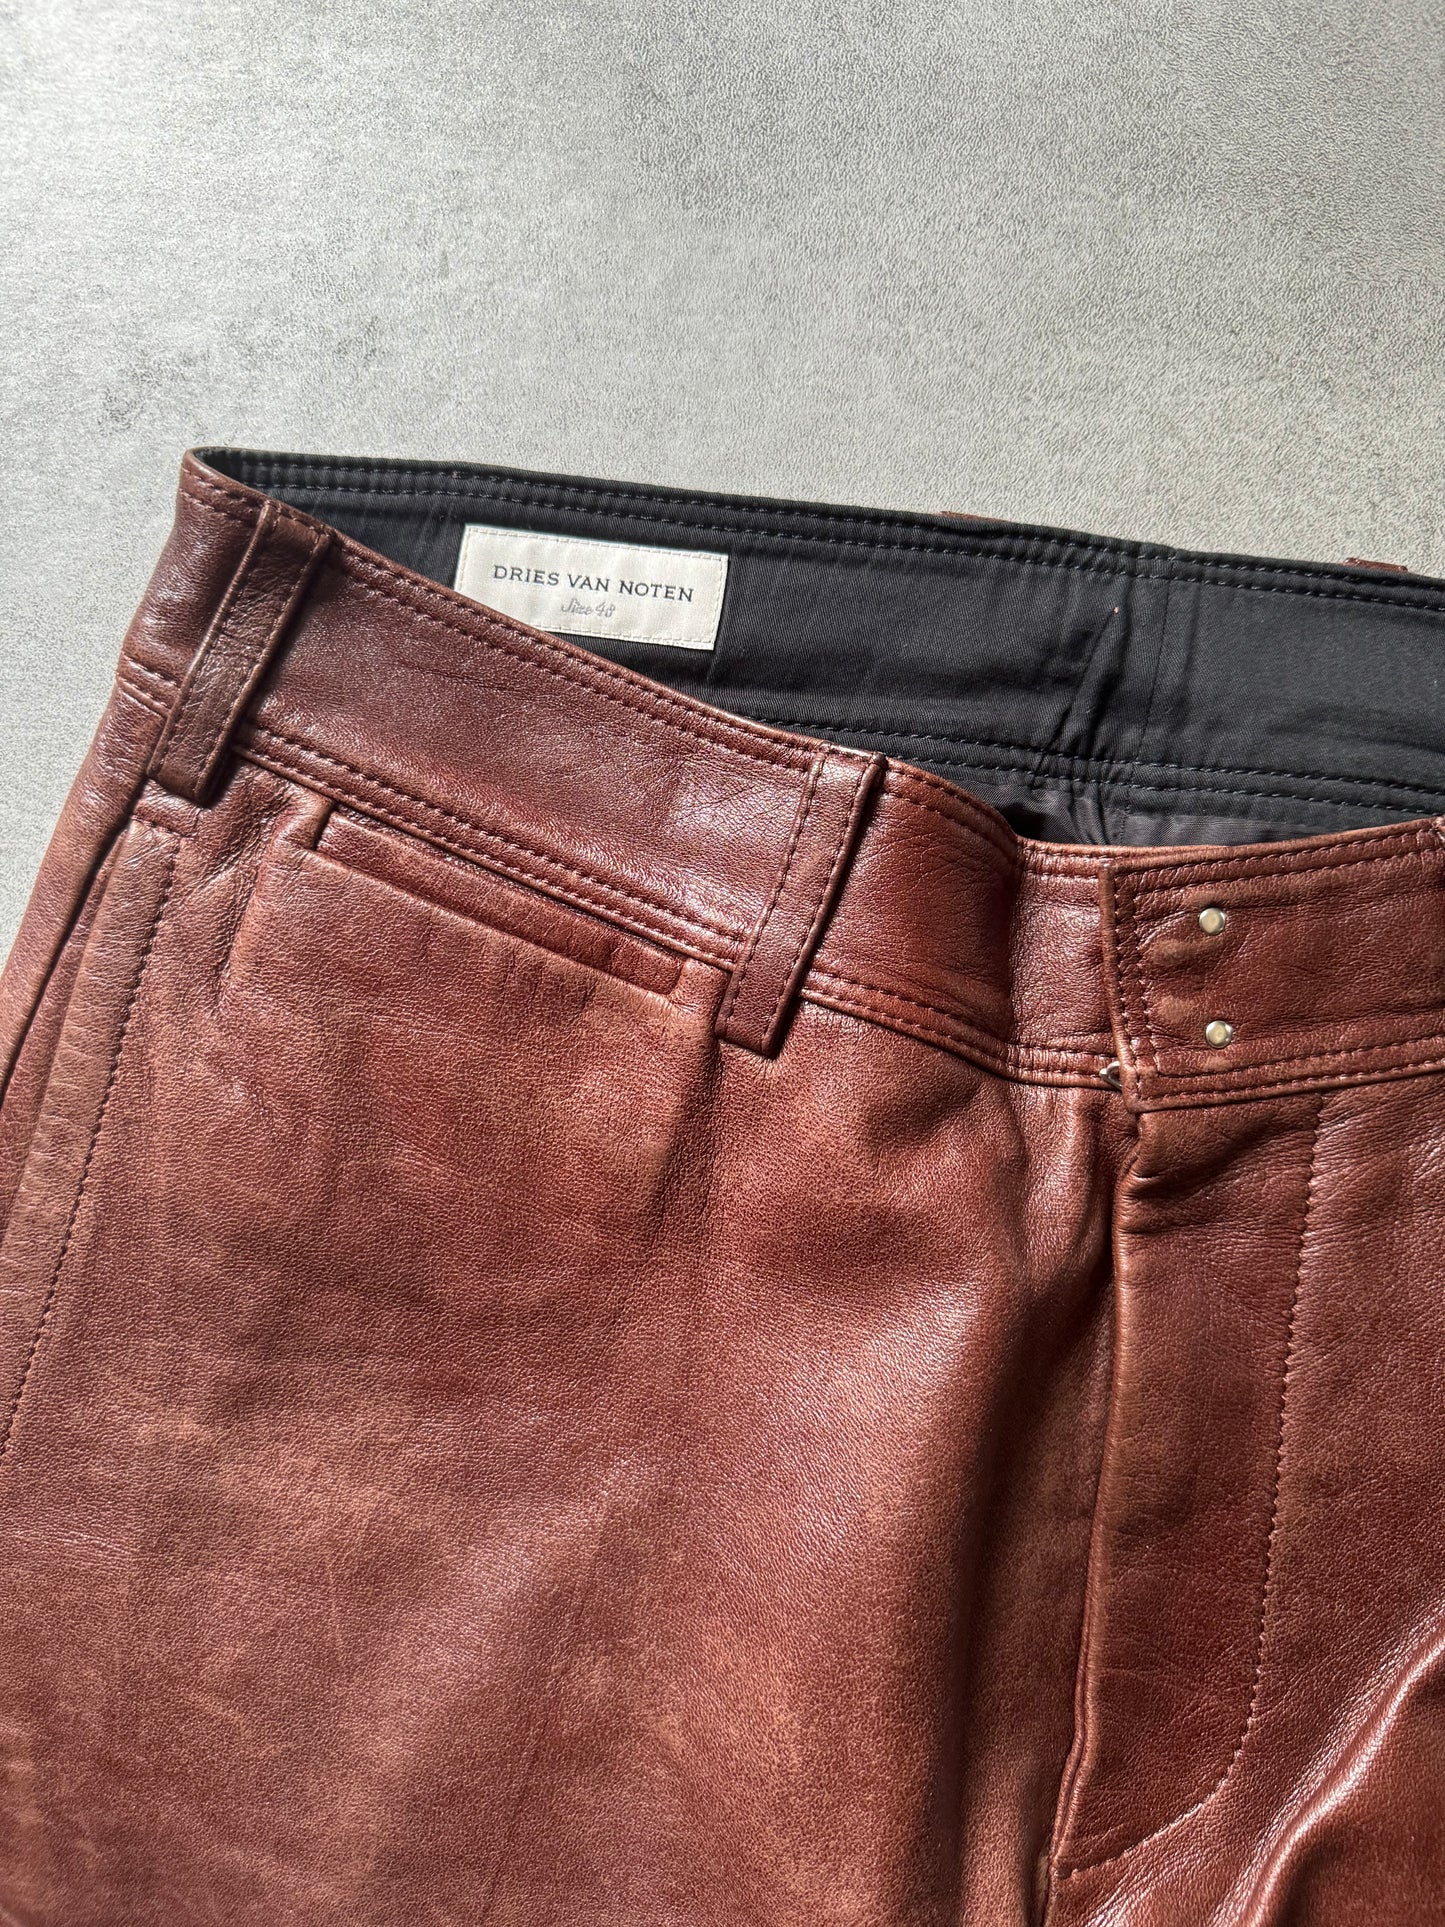 Dries Van Noten Brown Leather Pants  (M) - 9